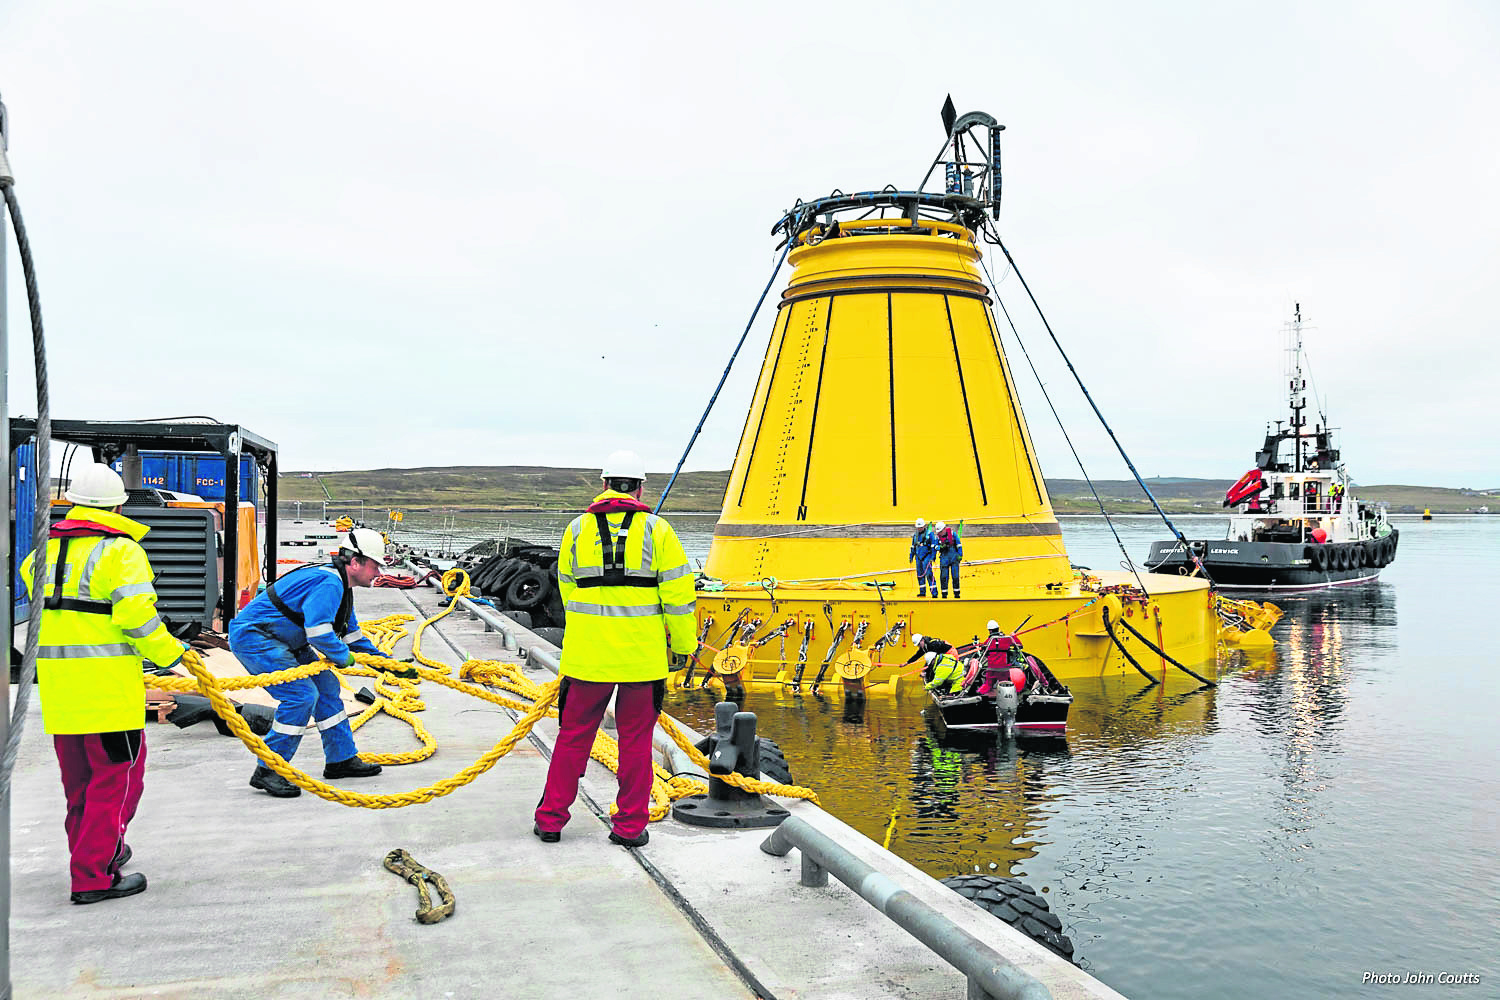 Hurricane Energys turret loading buoy at Lerwick for final preparations before installation on the Lancaster Field, west of Shetland. Credit: John Coutts